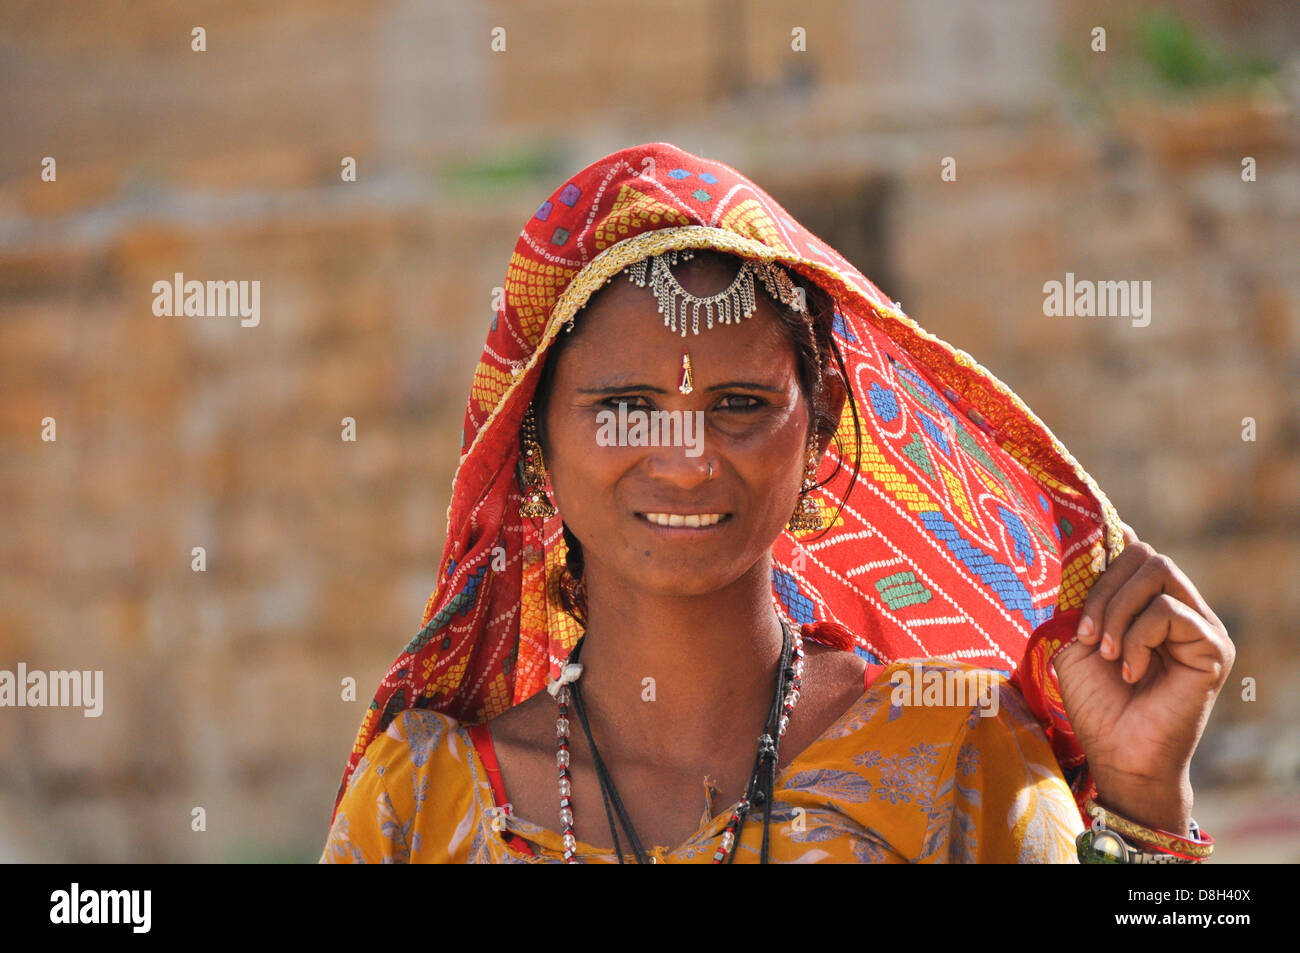 Rajasthani woman in traditional sari dress and jewelry Jodhpur, Rajasthan, India Stock Photo